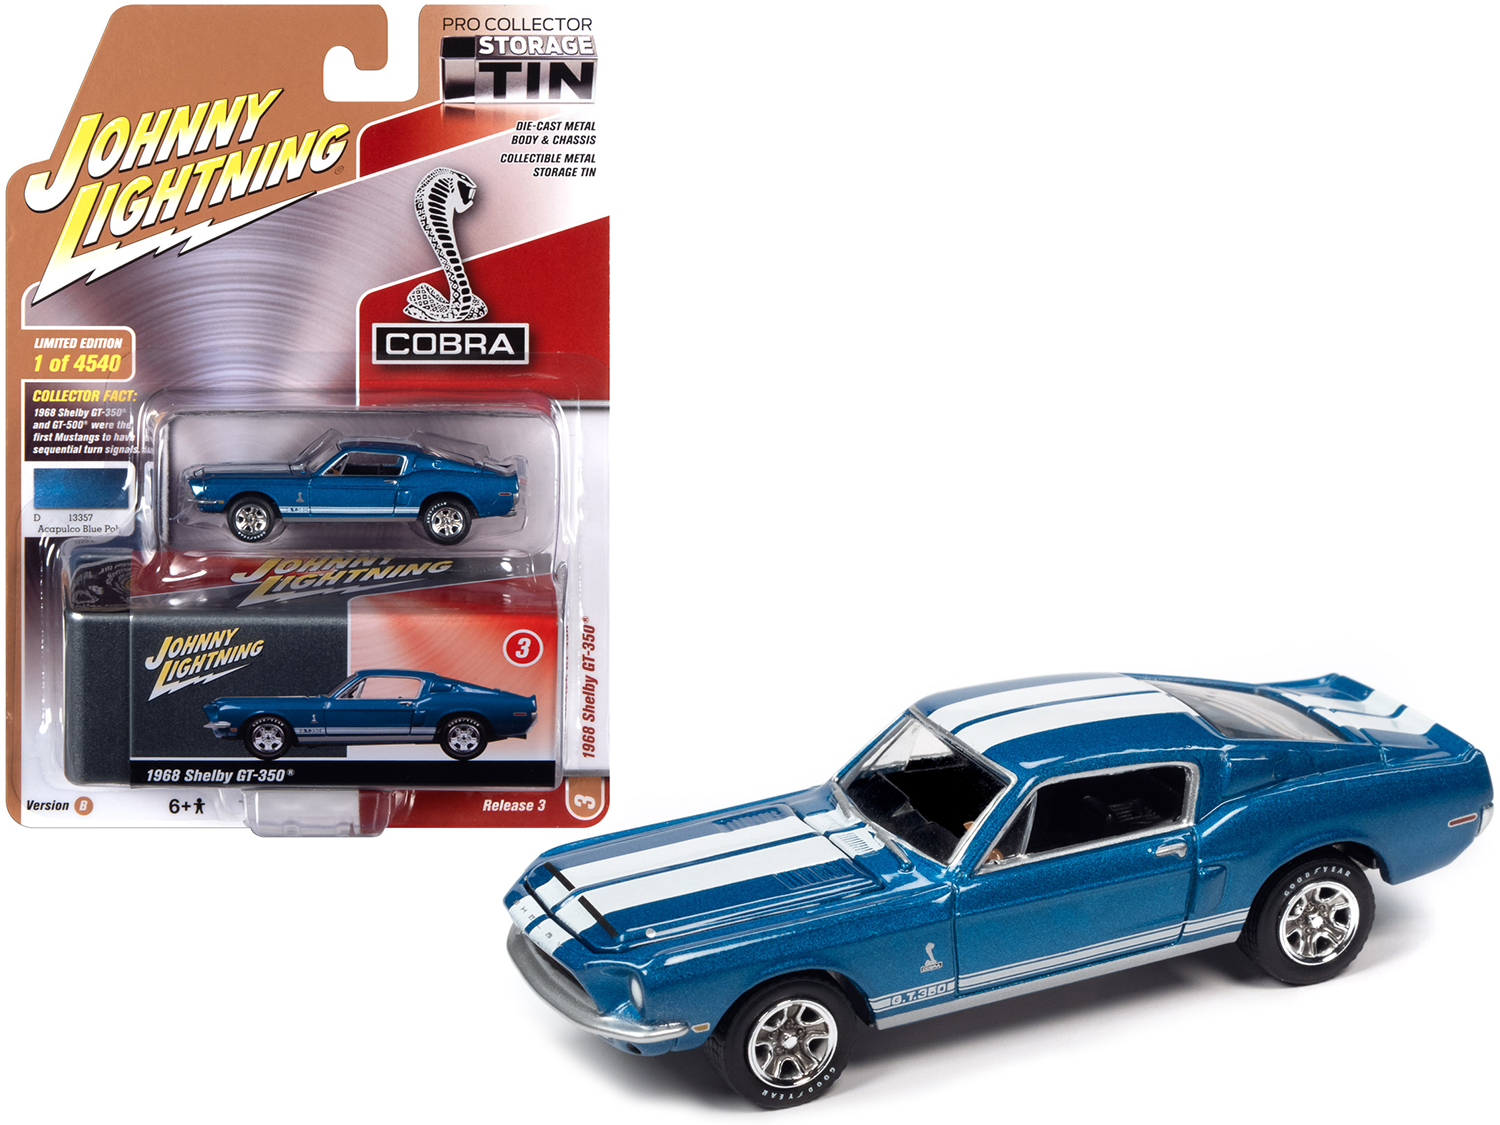 Johnny Lightning 1968 Ford Mustang Shelby GT-350 Acapulco Blue Metallic & Collector Tin Ltd Ed 4540pcs 1/64 Diecast Model Car by Johnny Lightning